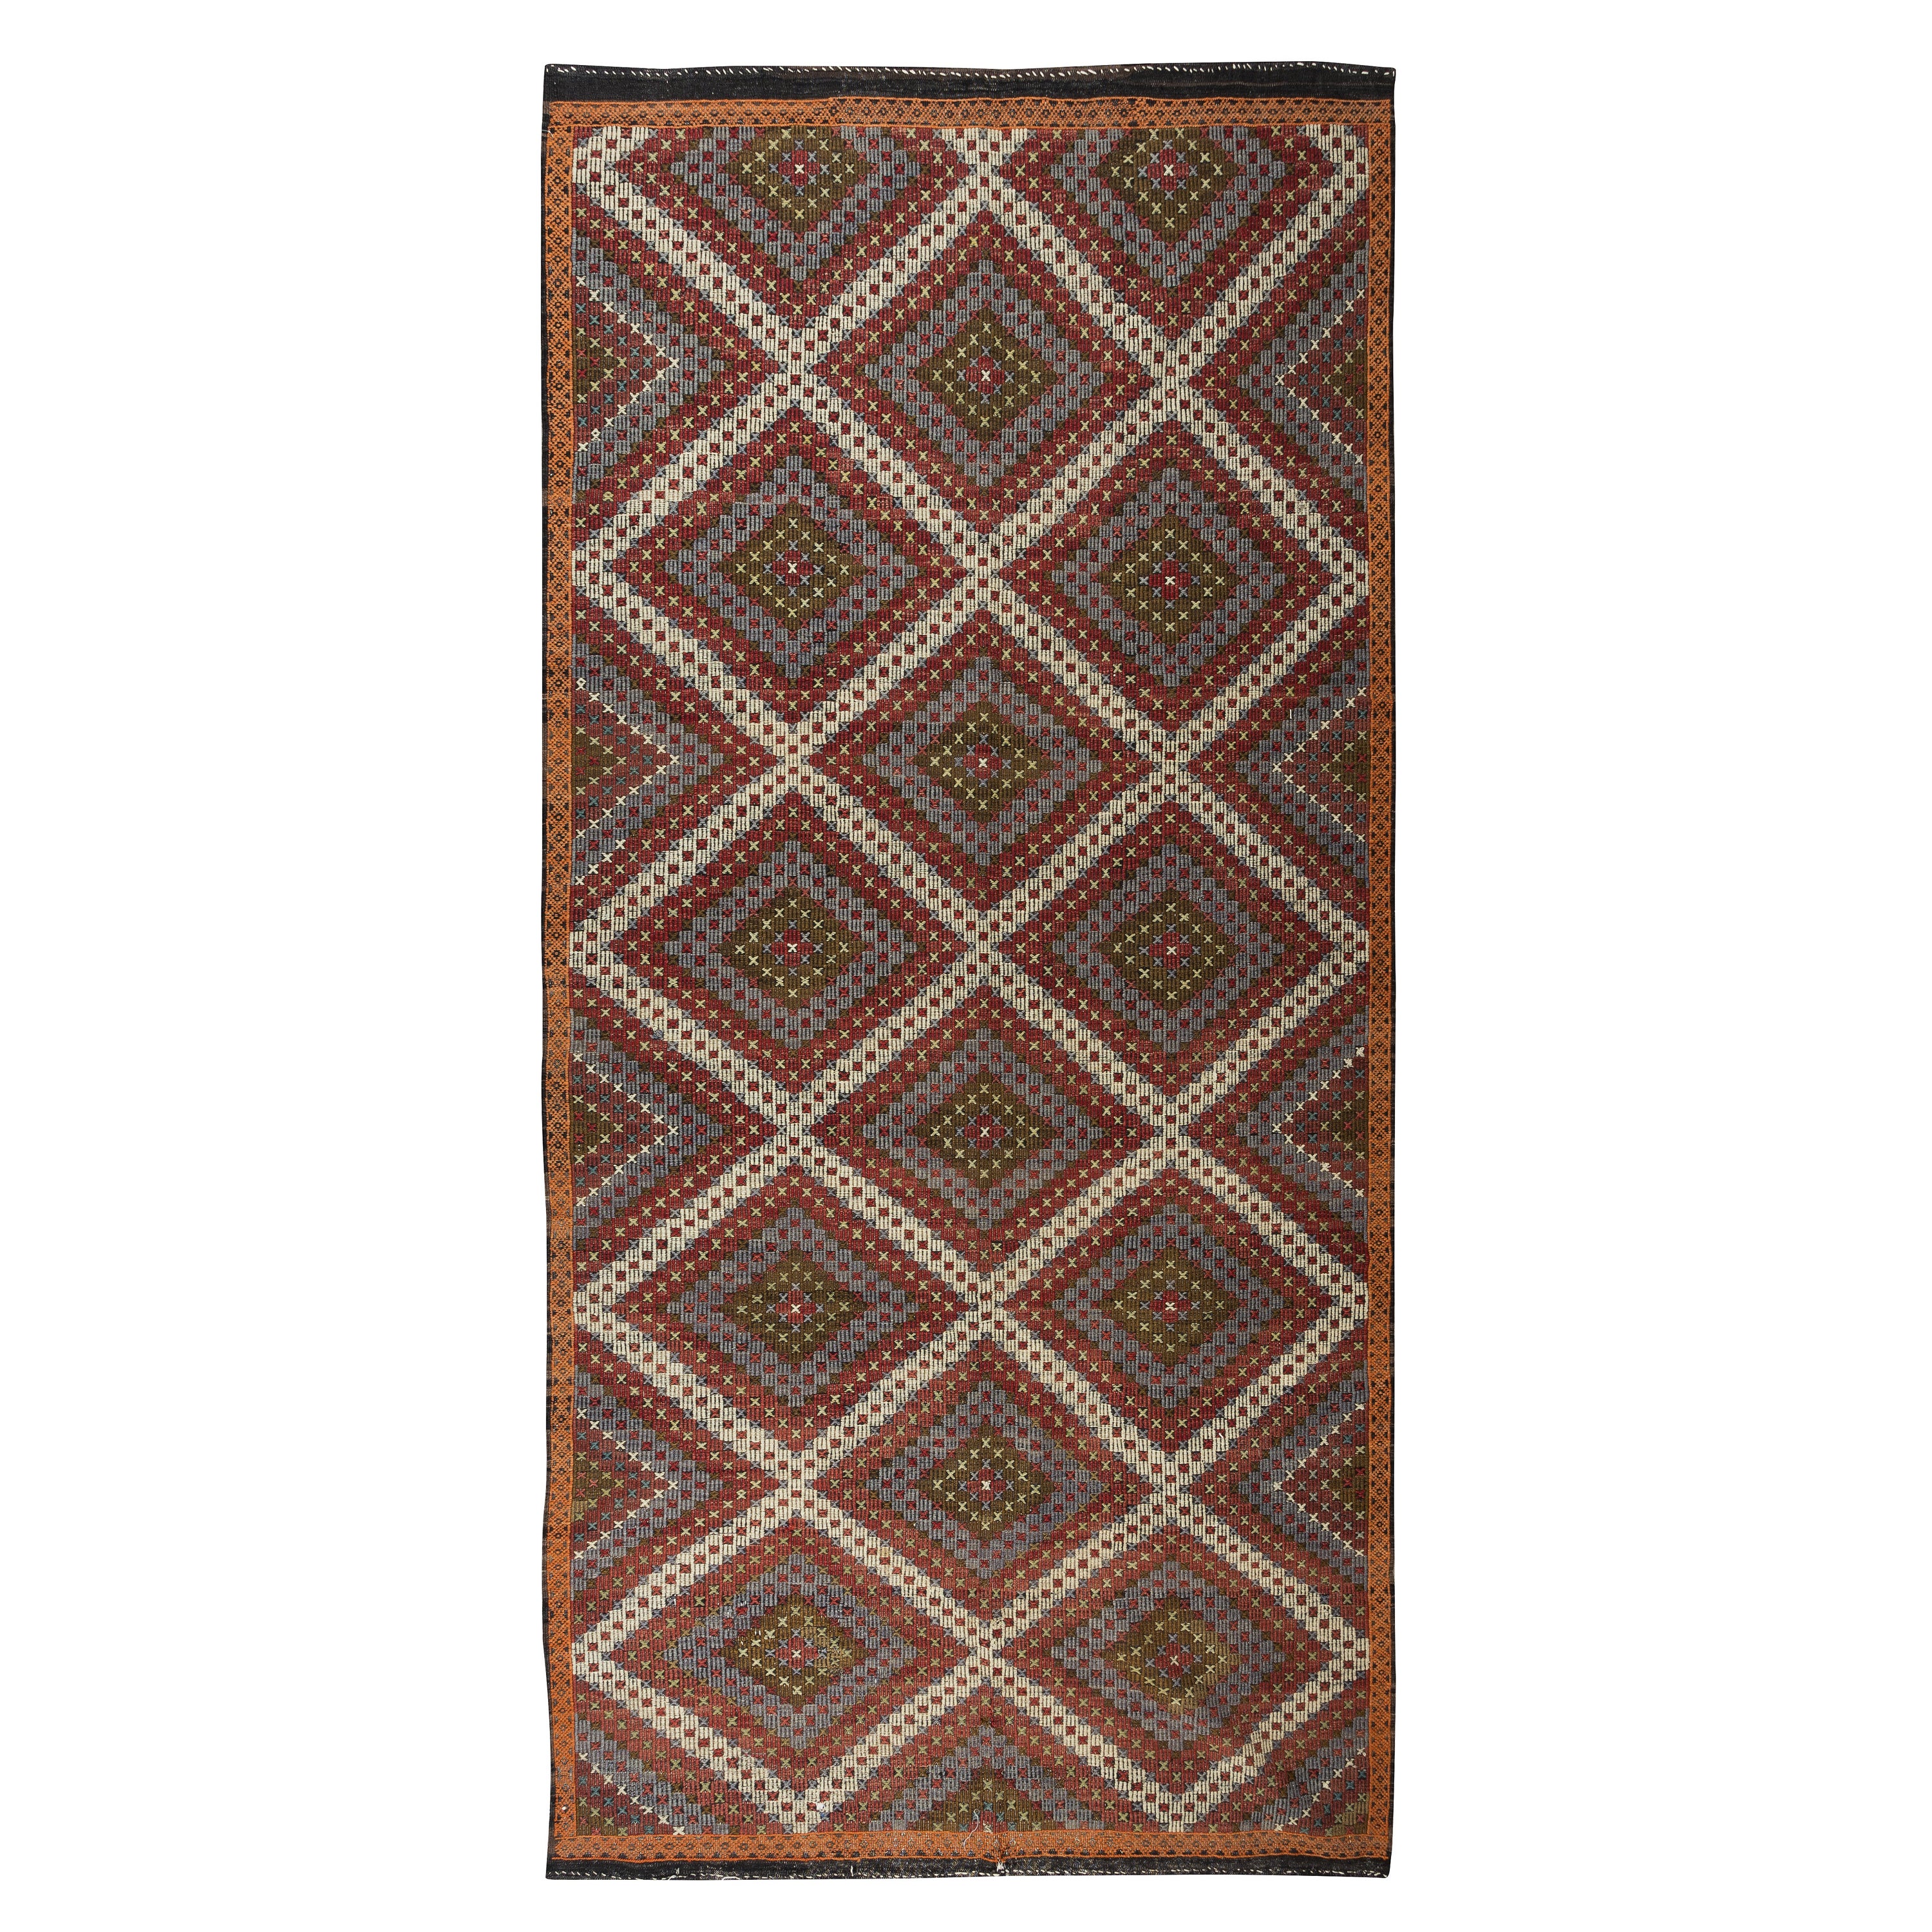 6x12.3 ft Vintage Turkish Wool Jajim Kilim, Embroidered Handwoven Bohemian Rug